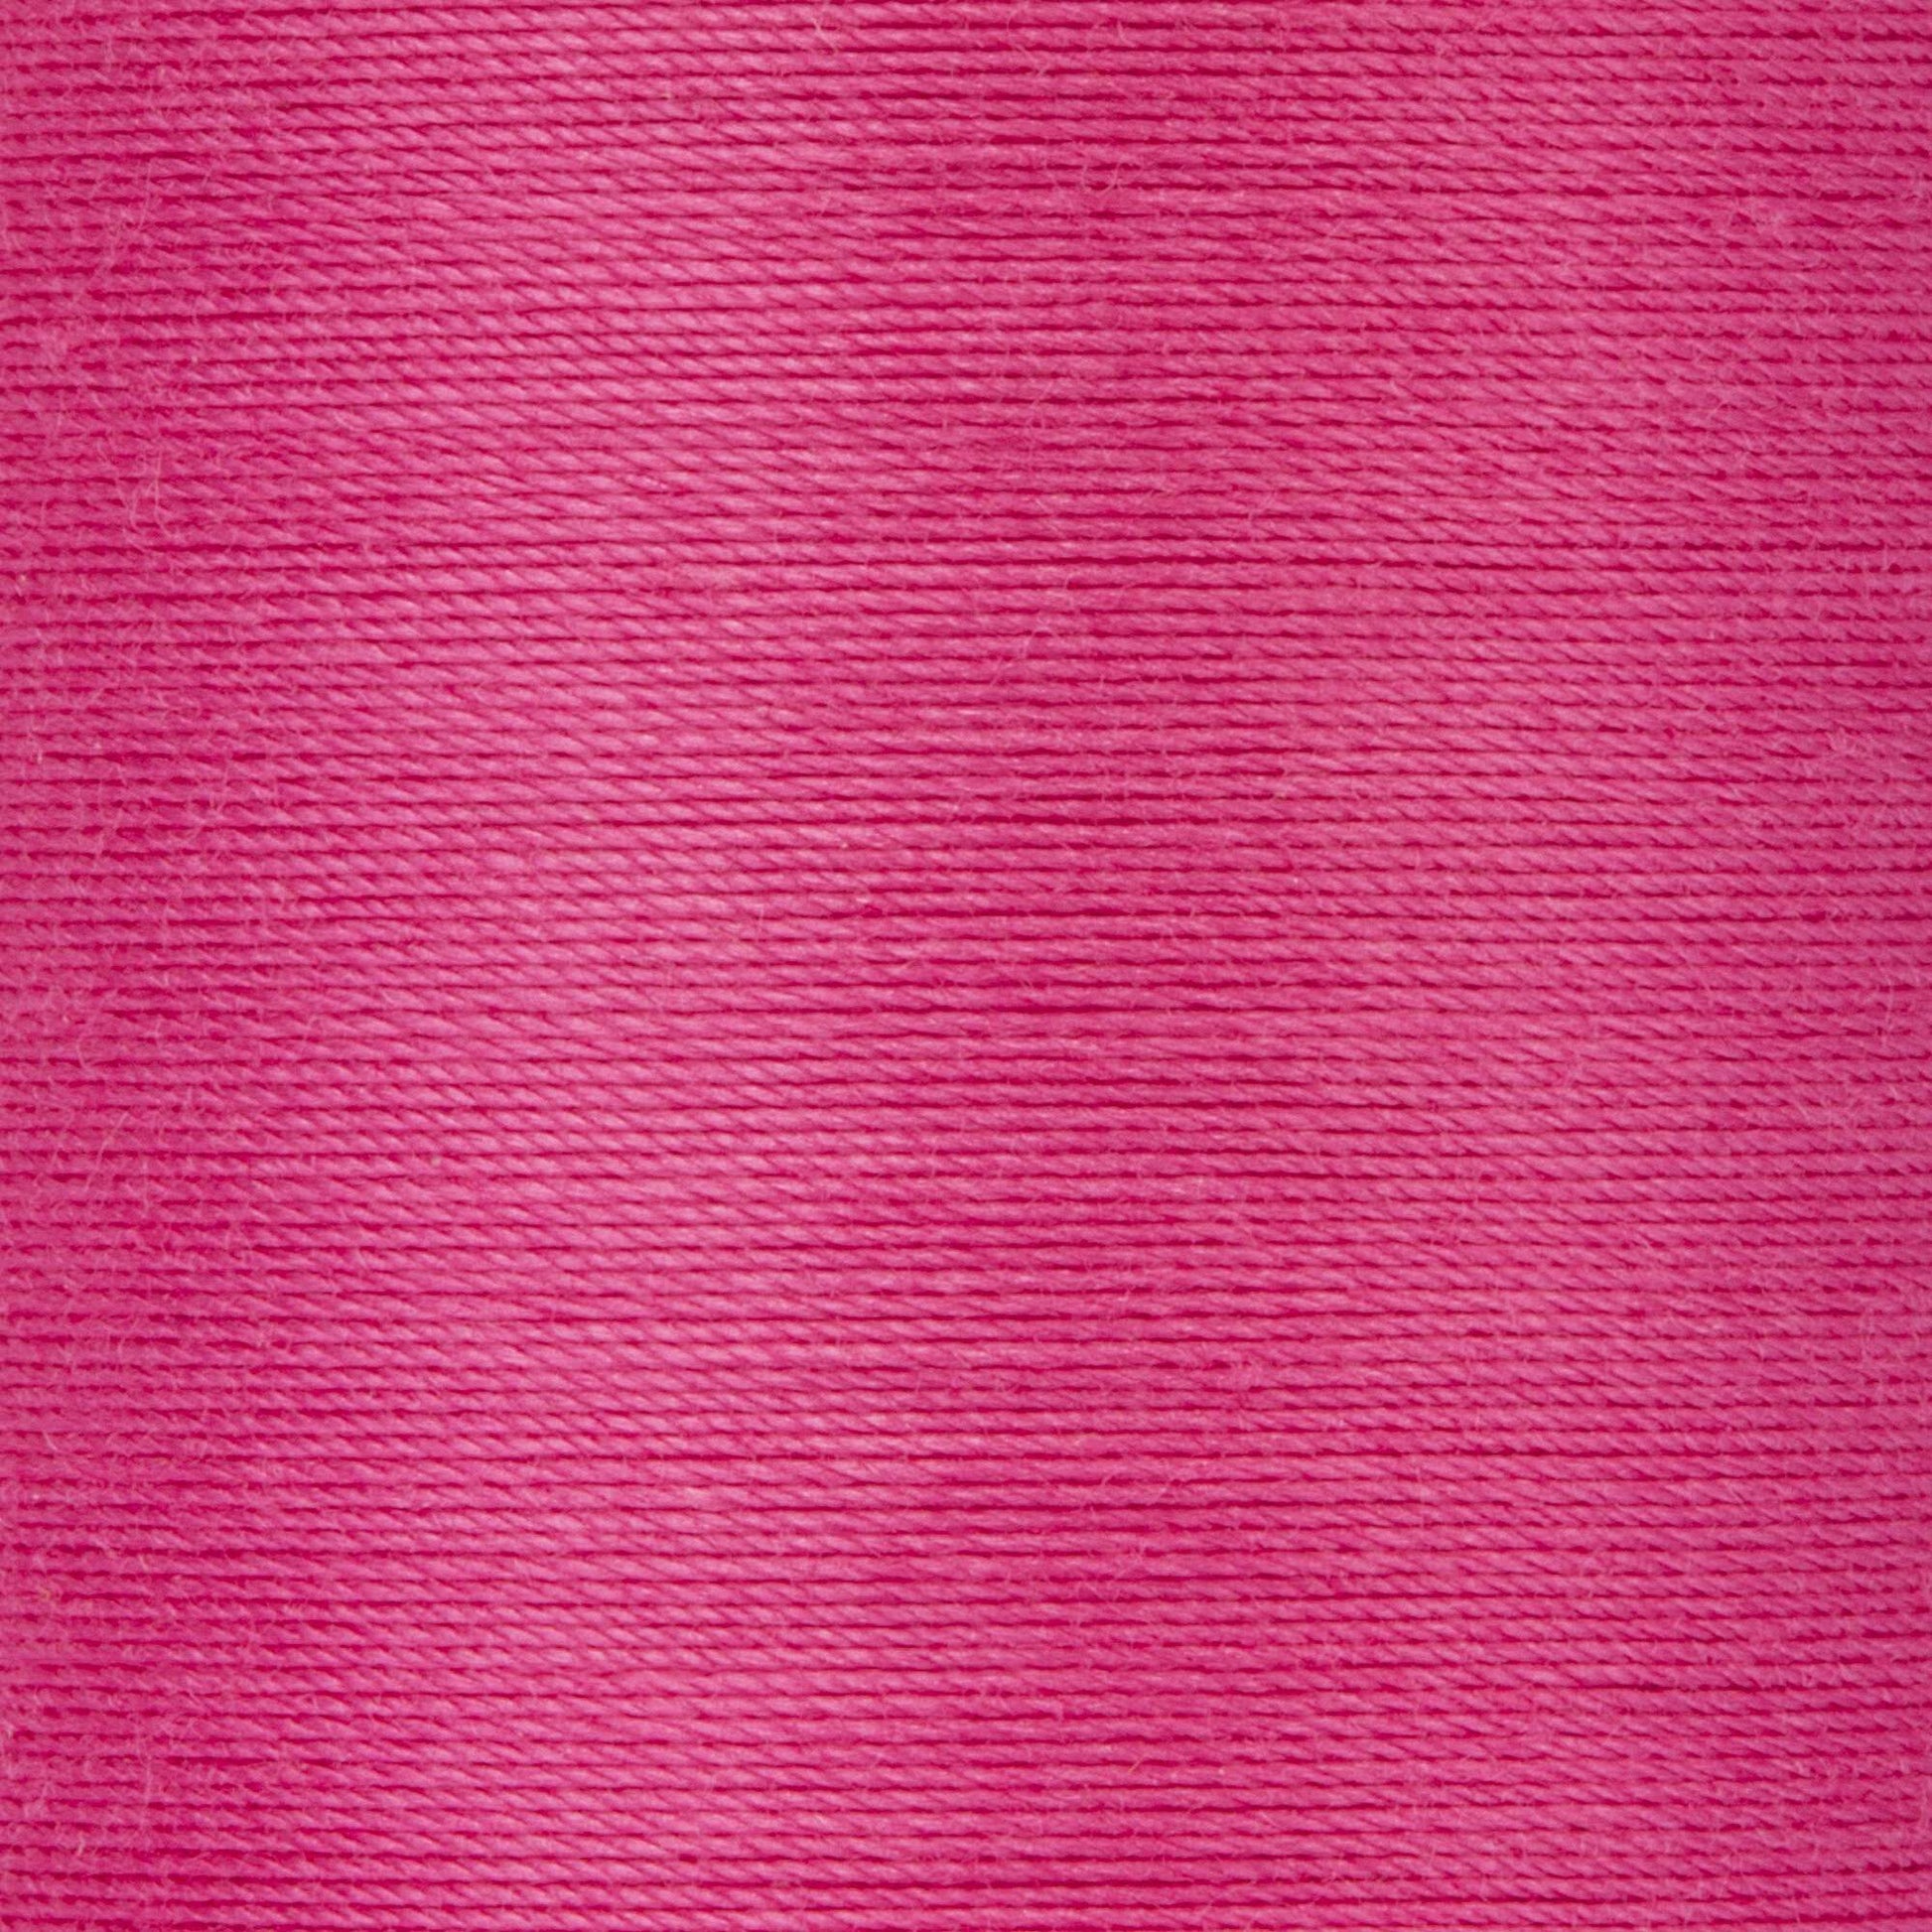 Coats & Clark Cotton Machine Quilting Thread (350 Yards) Hot Pink